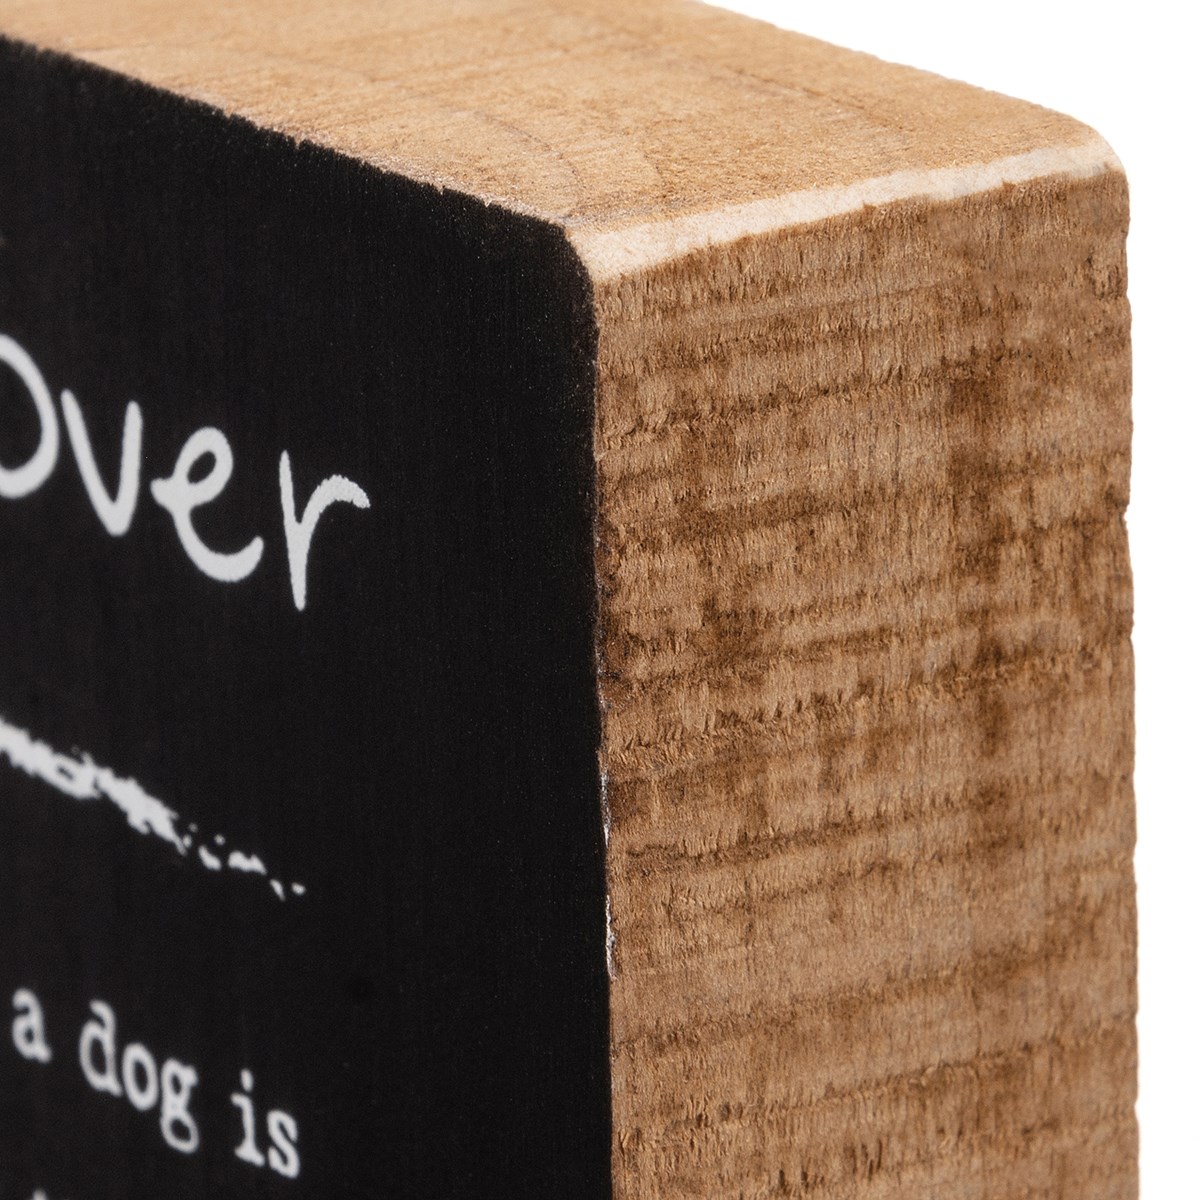 Dog Lover Block Sign - Wood